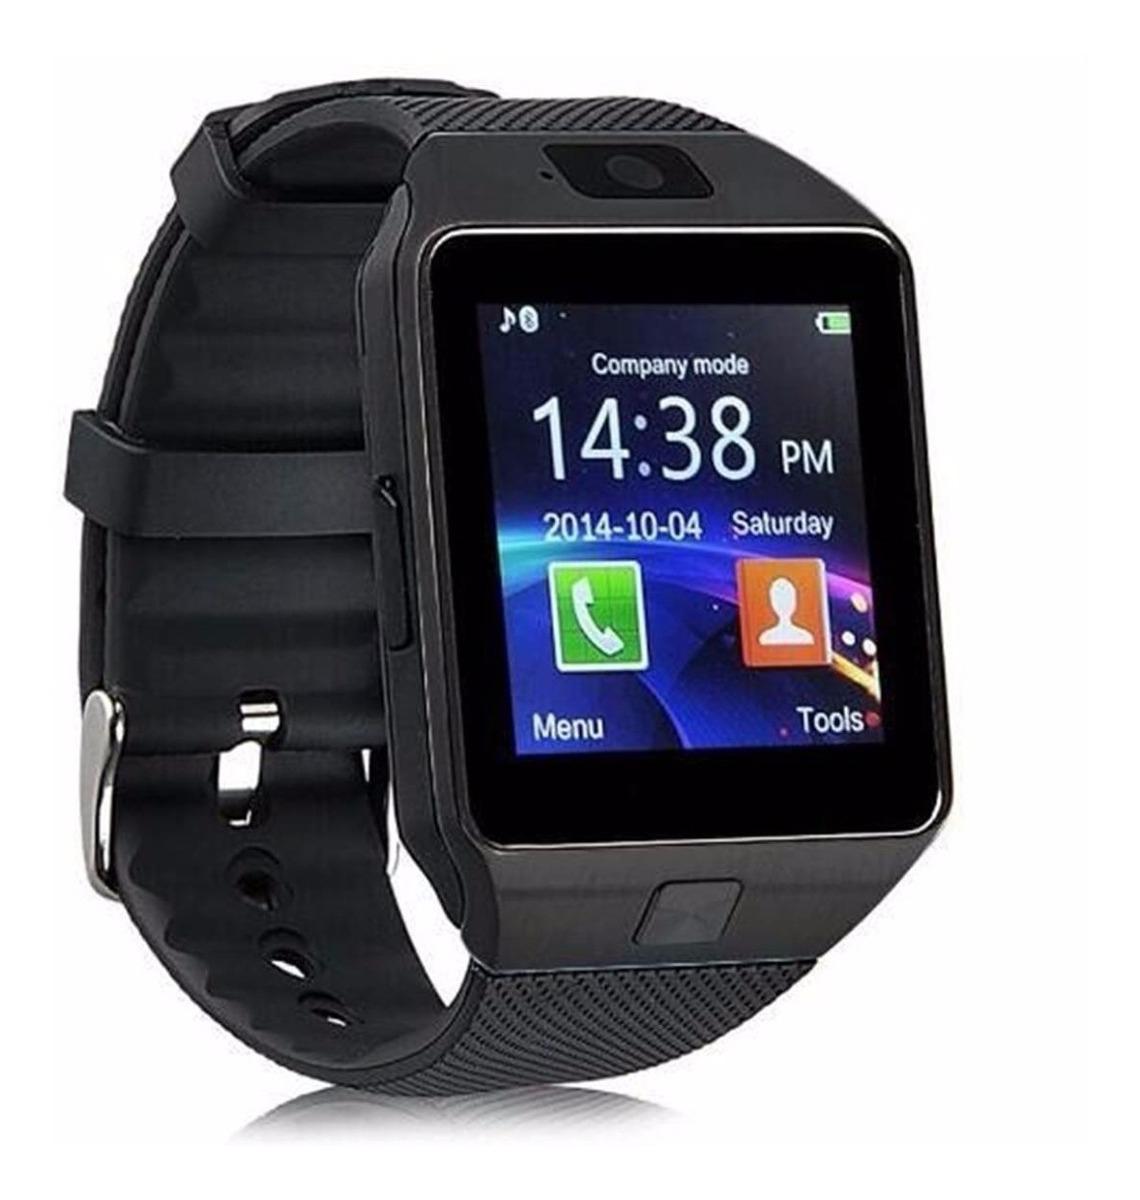 Dzo9 smart watch whatsapp - Search